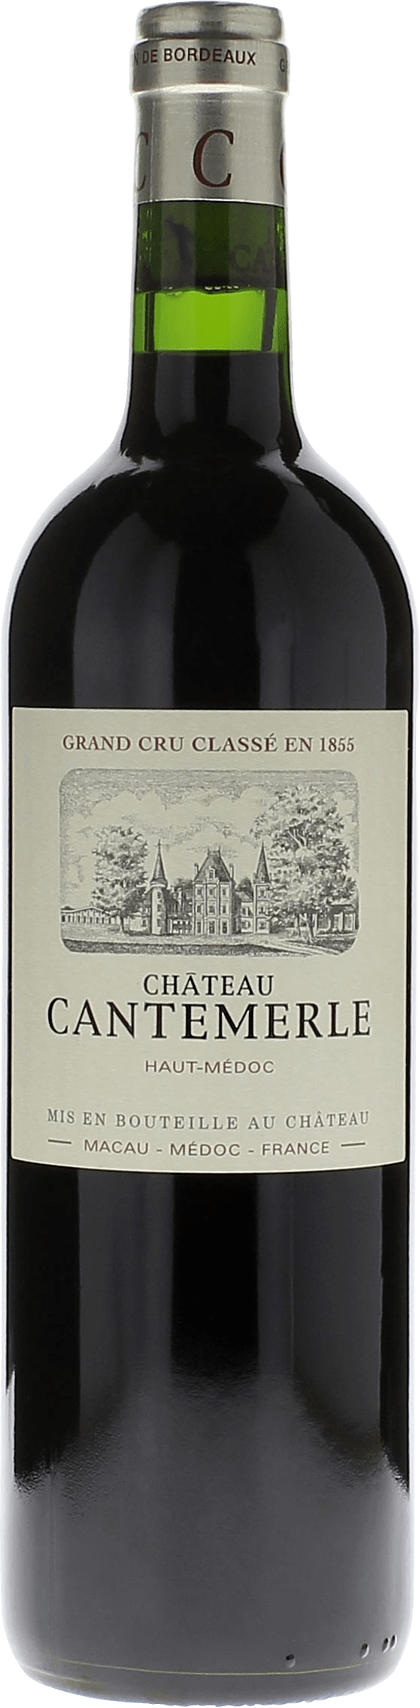 Cantemerle 2000 5me Grand cru class Mdoc, Bordeaux rouge